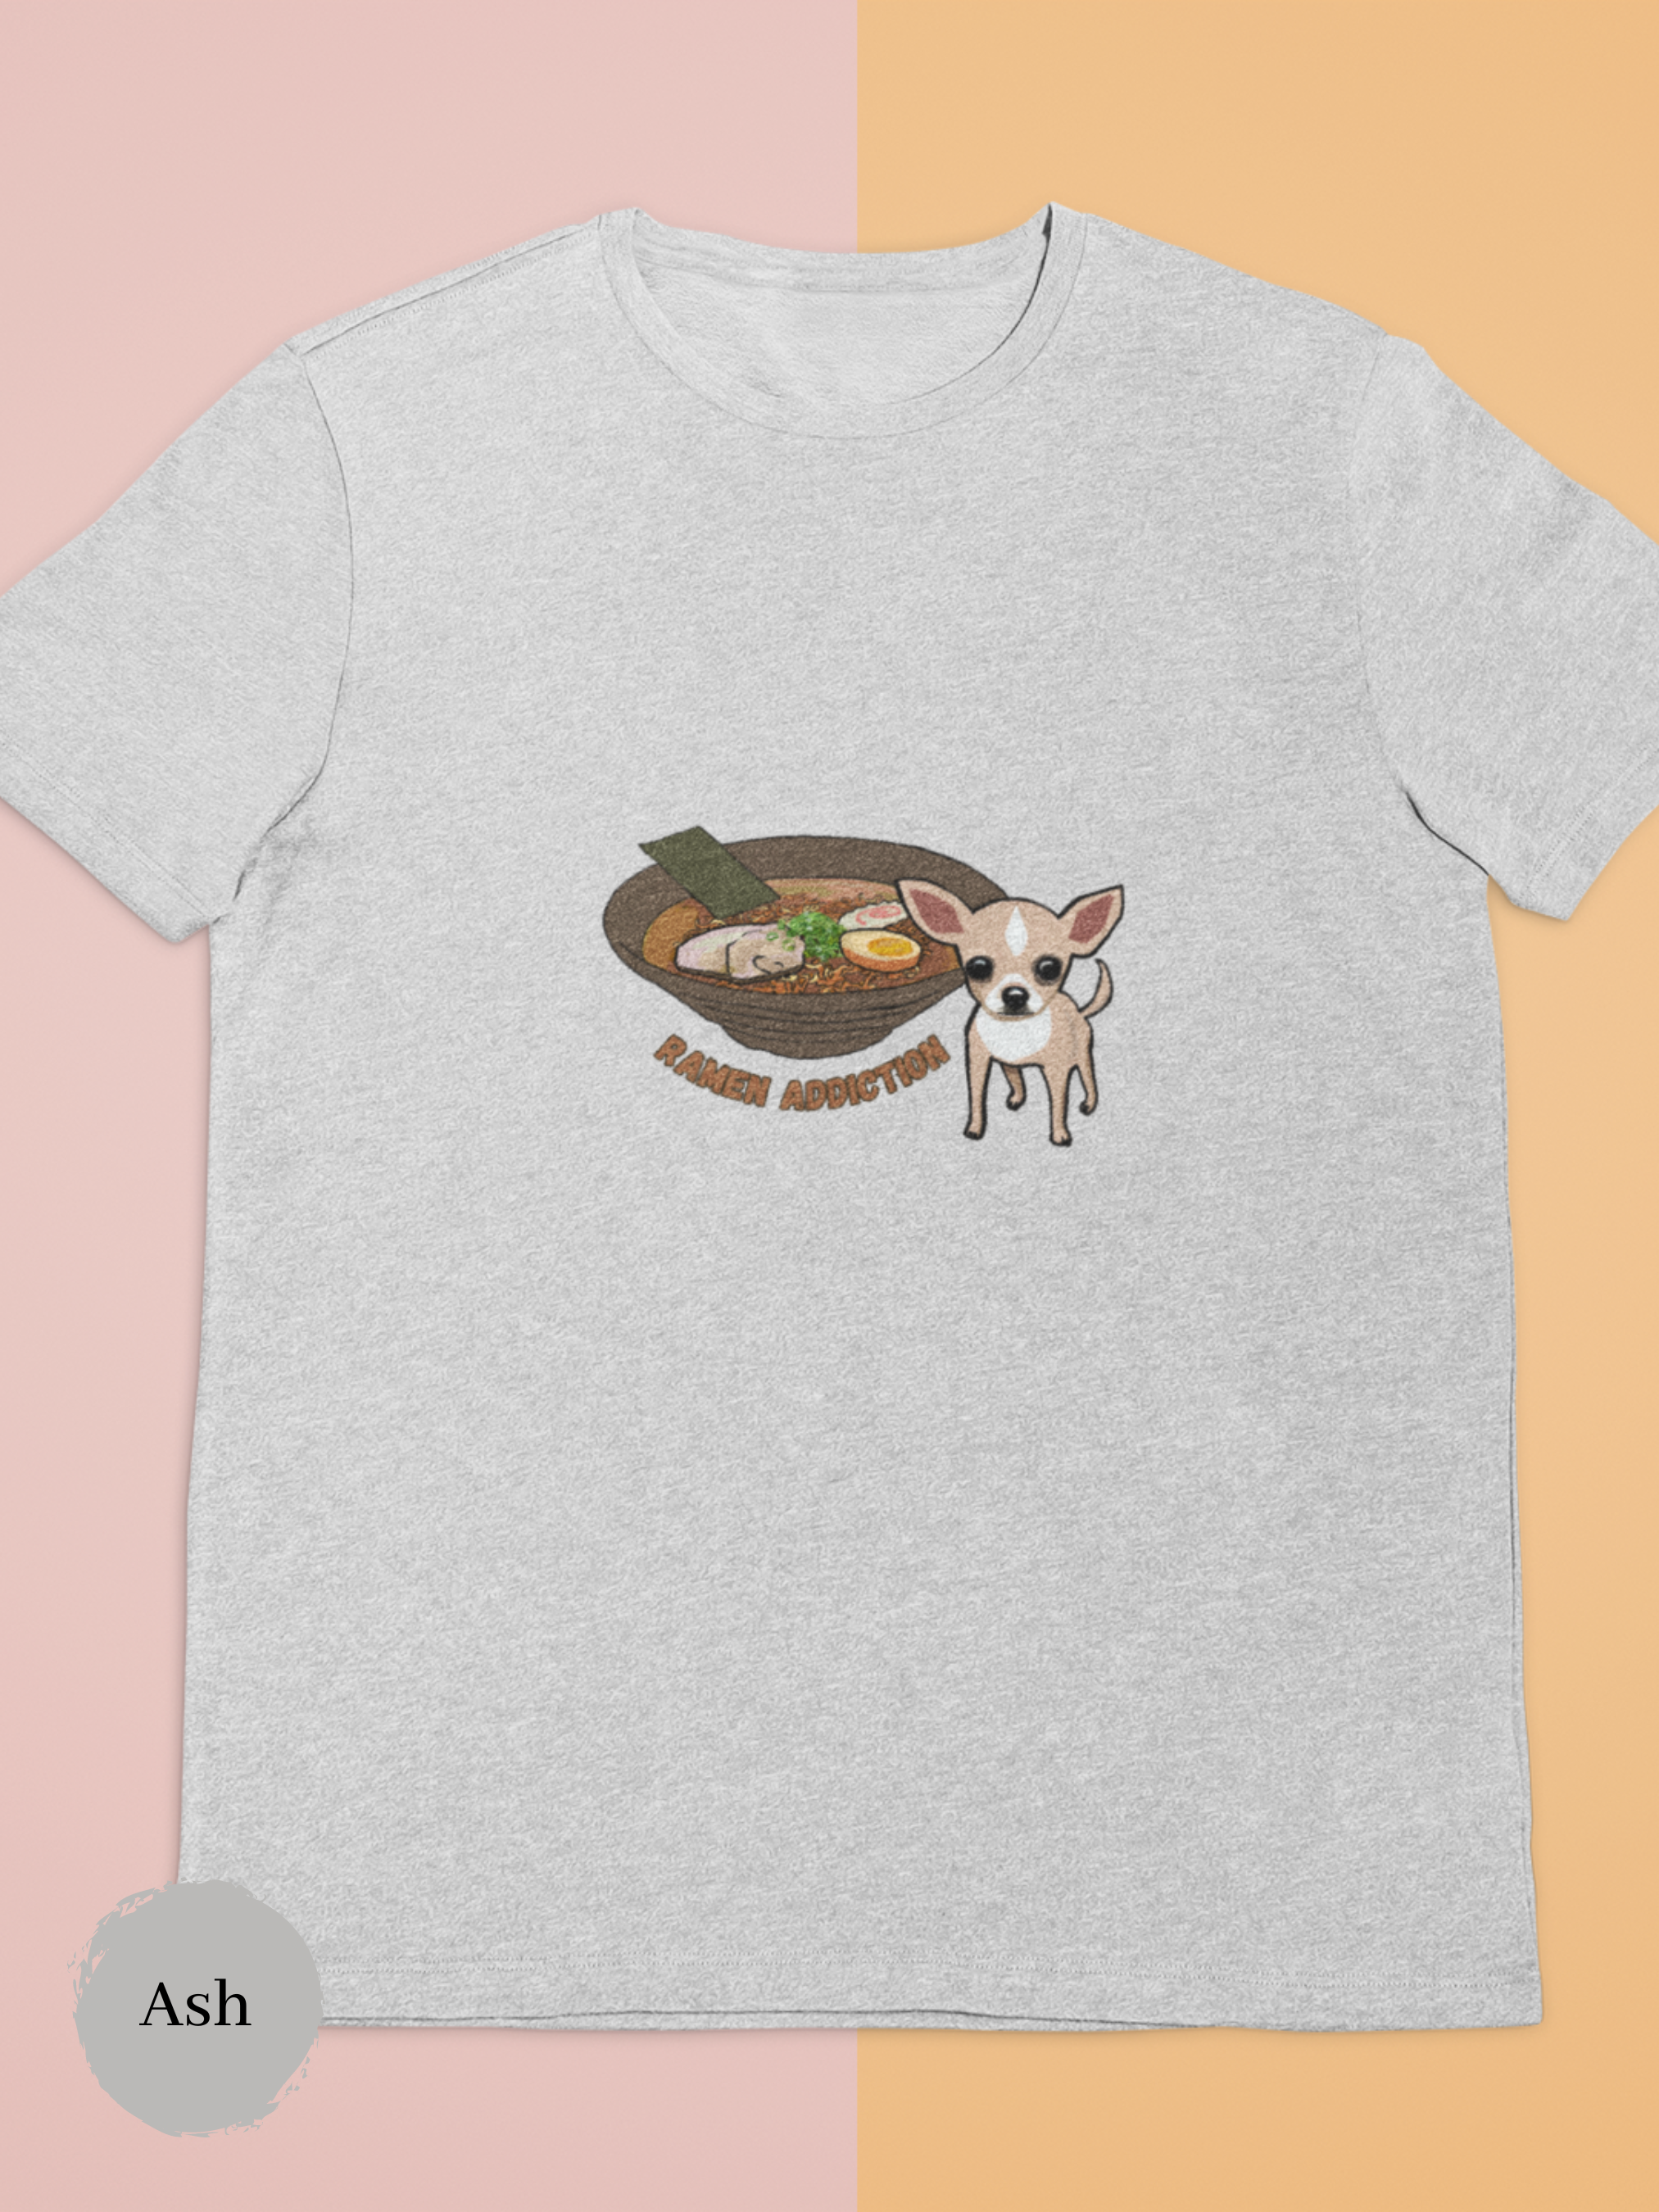 Ramen T-shirt: Indulge in Ramen Addiction with Chihuahua Companion - Japanese Shirt, Foodie Shirt, and Ramen Art Galore!